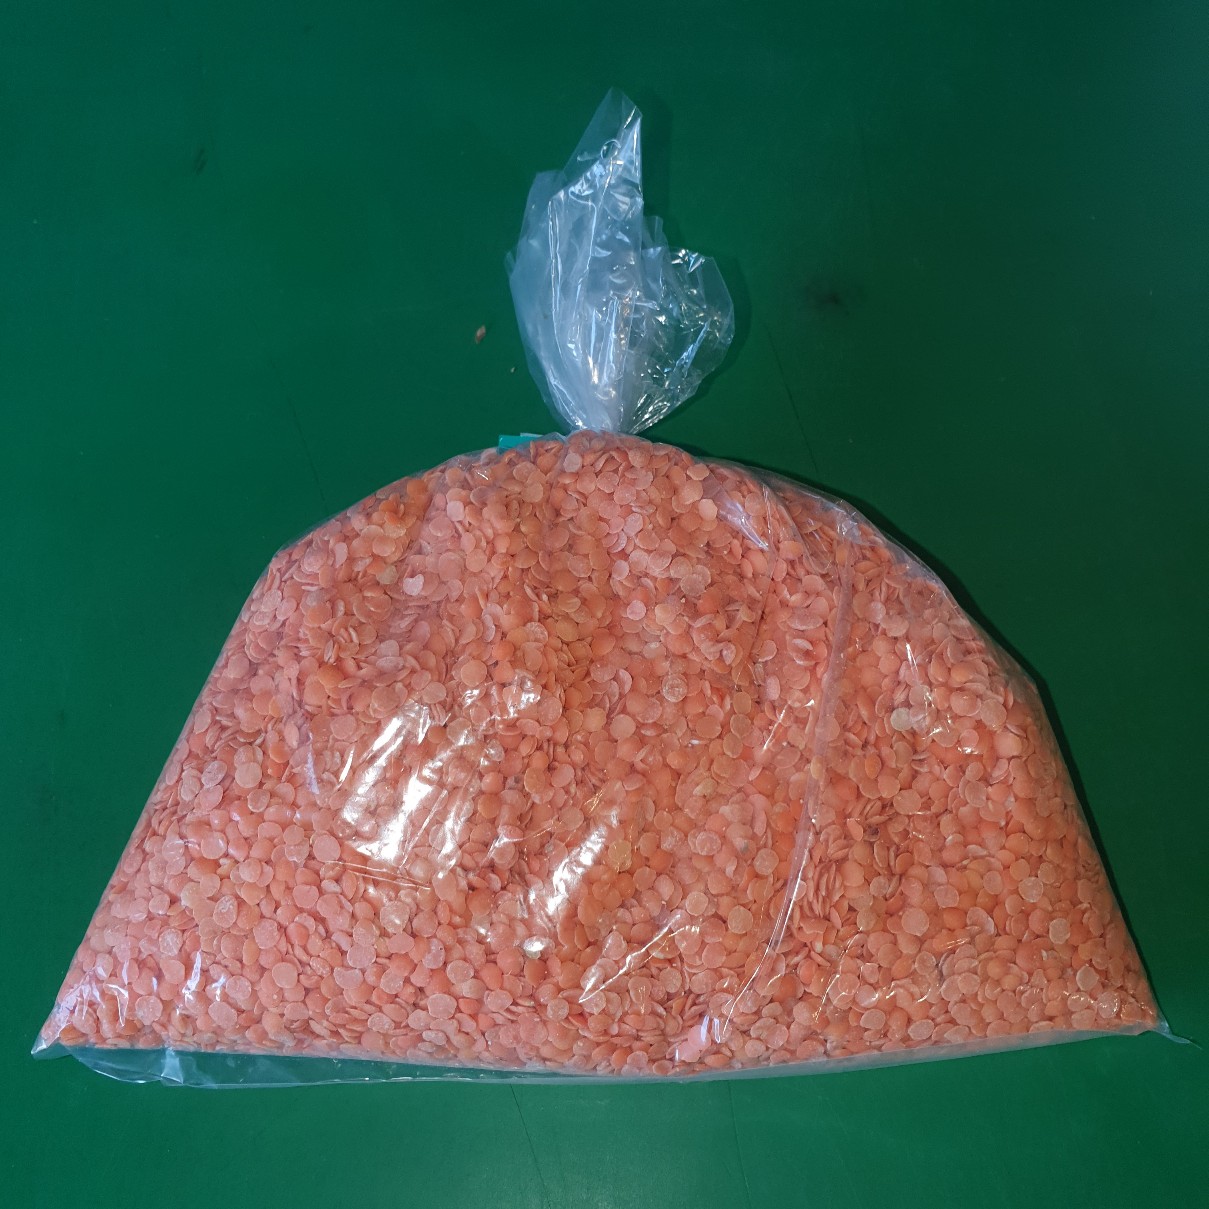 Fresh Red lentils 0.5kg bag - £ 1.50  per bag